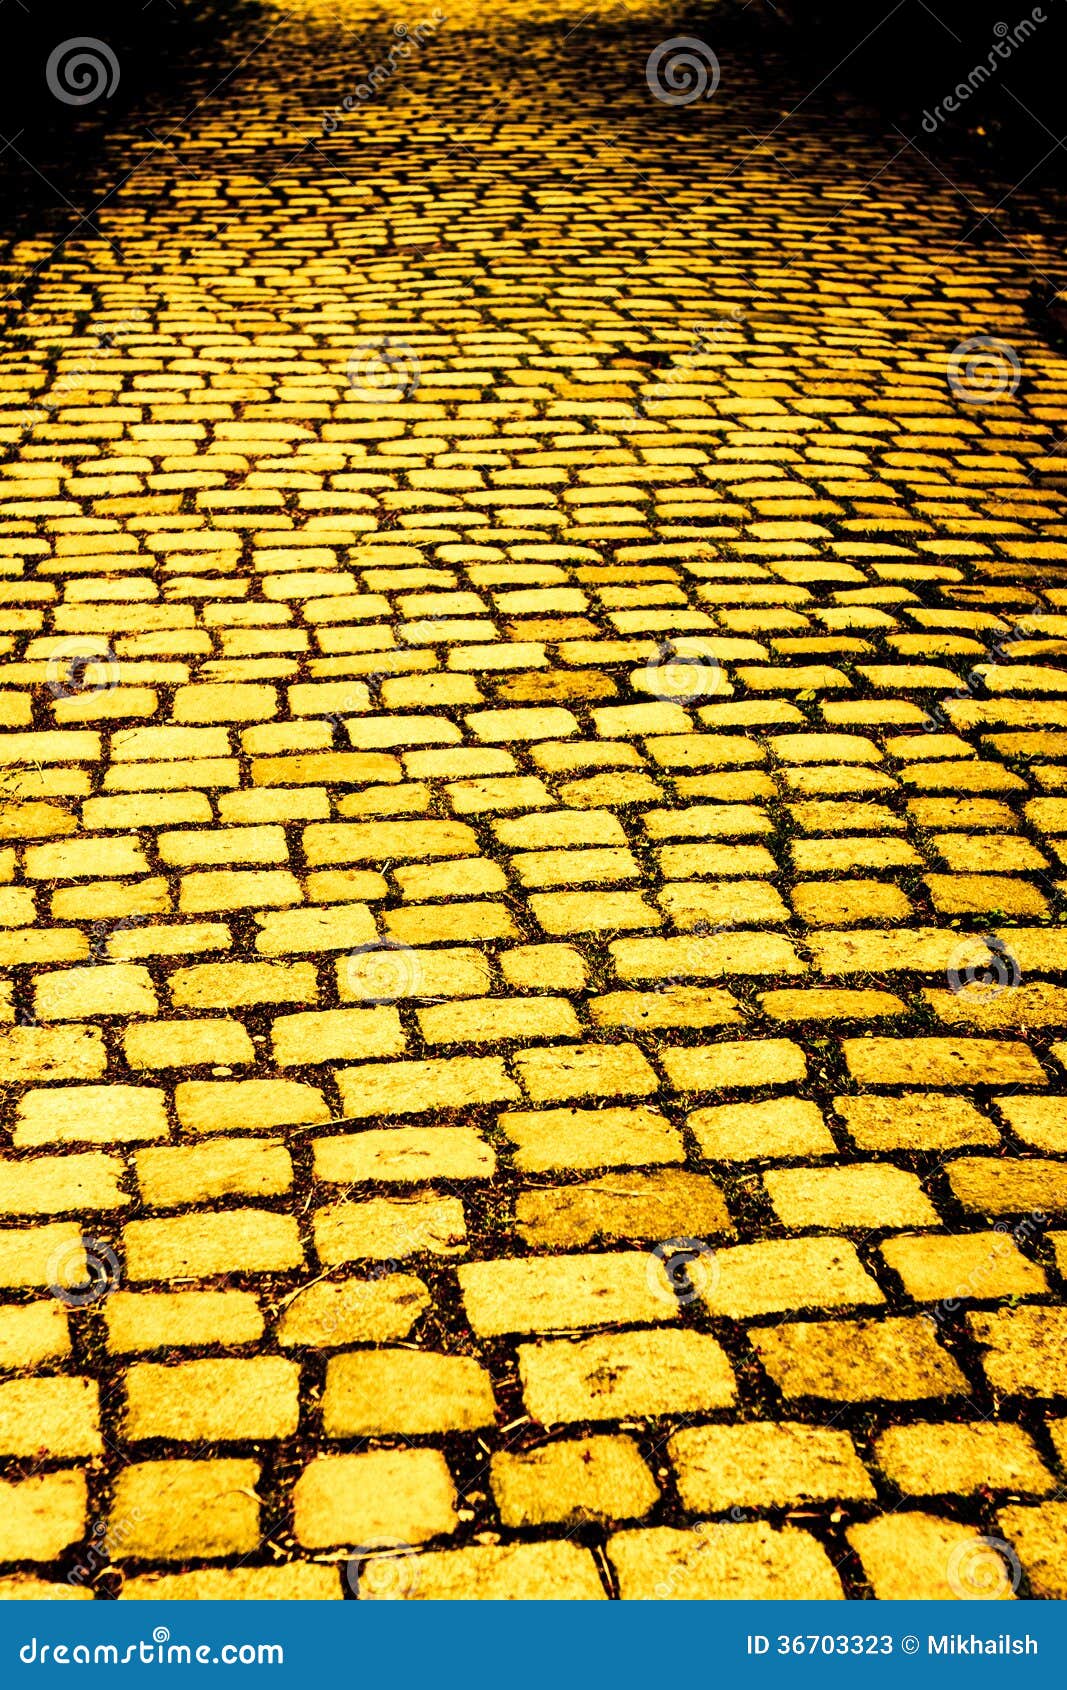 clipart of yellow brick road - photo #41